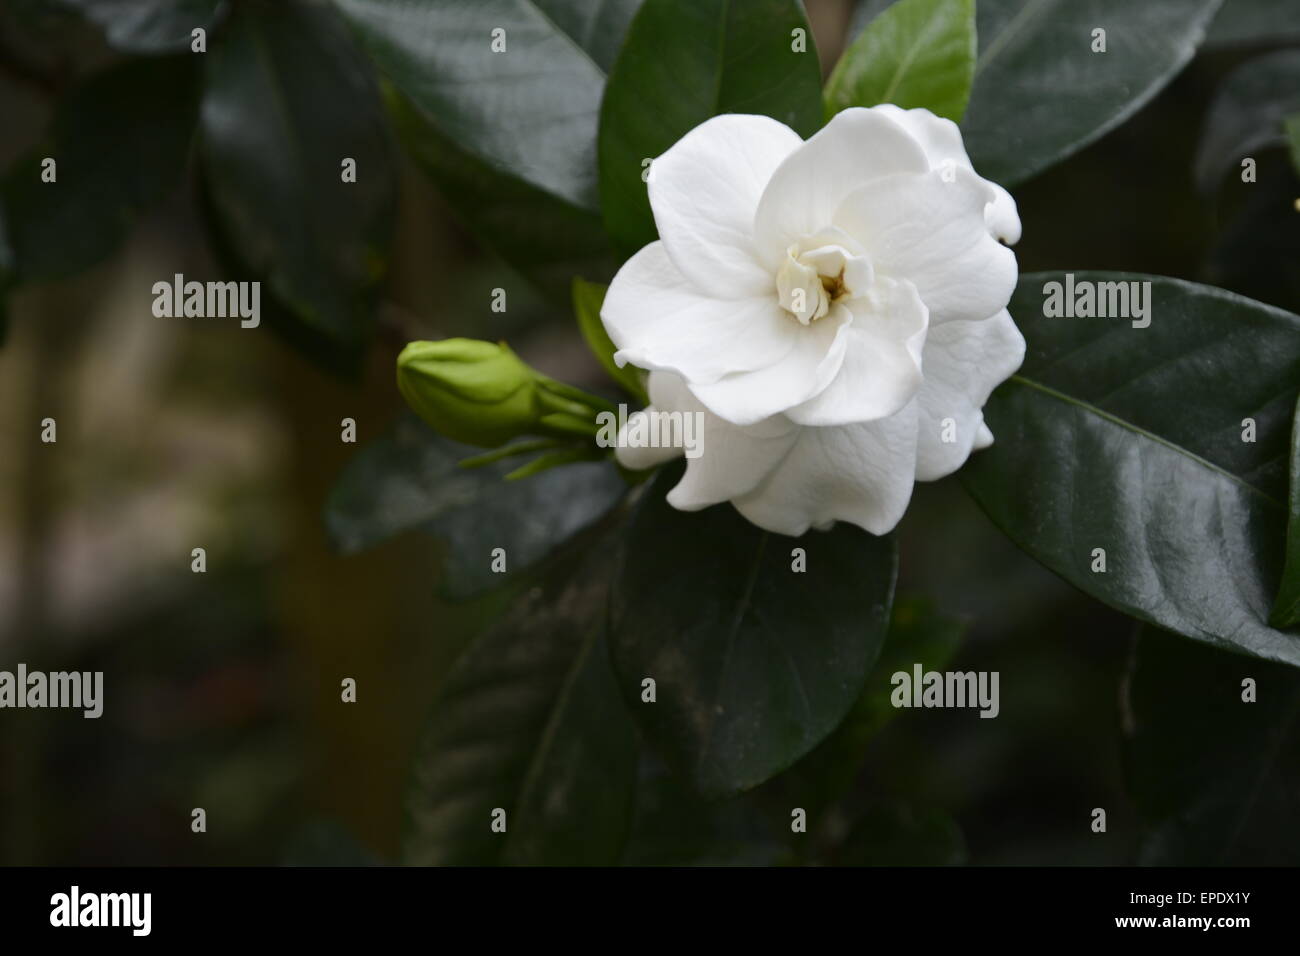 White gardenia flower on dark background. Stock Photo